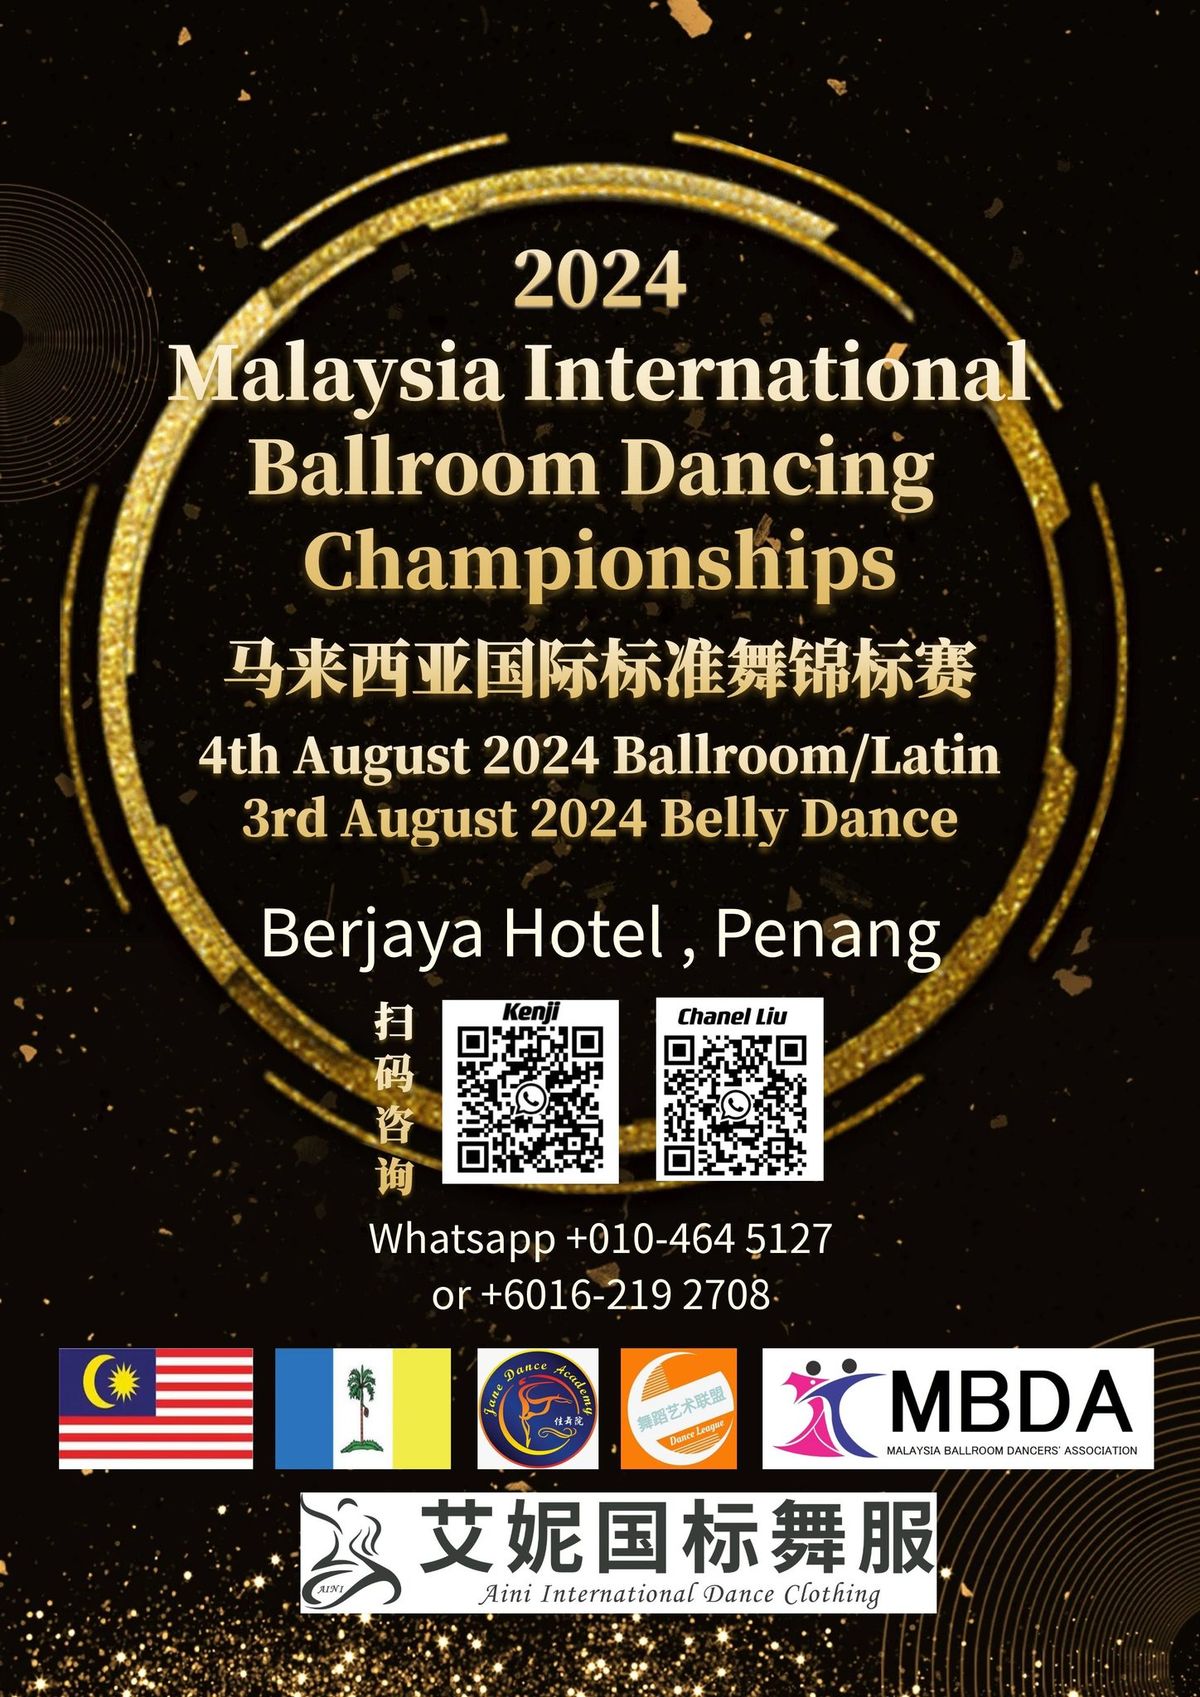 Malaysia International Ballroom Dancing Championship s